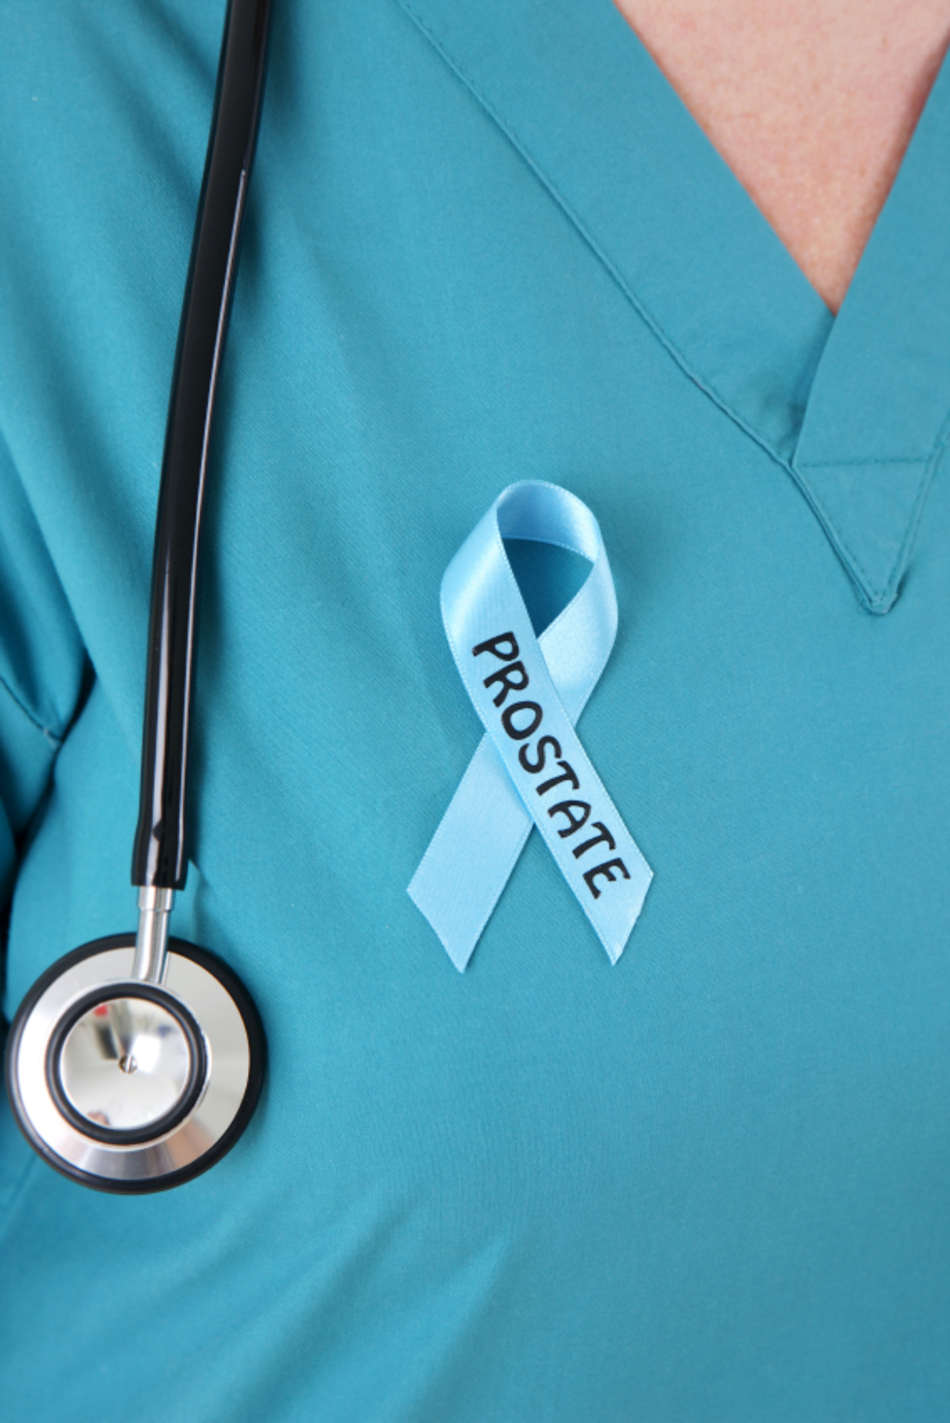 Should You Get a PSA Test for Prostate Cancer?